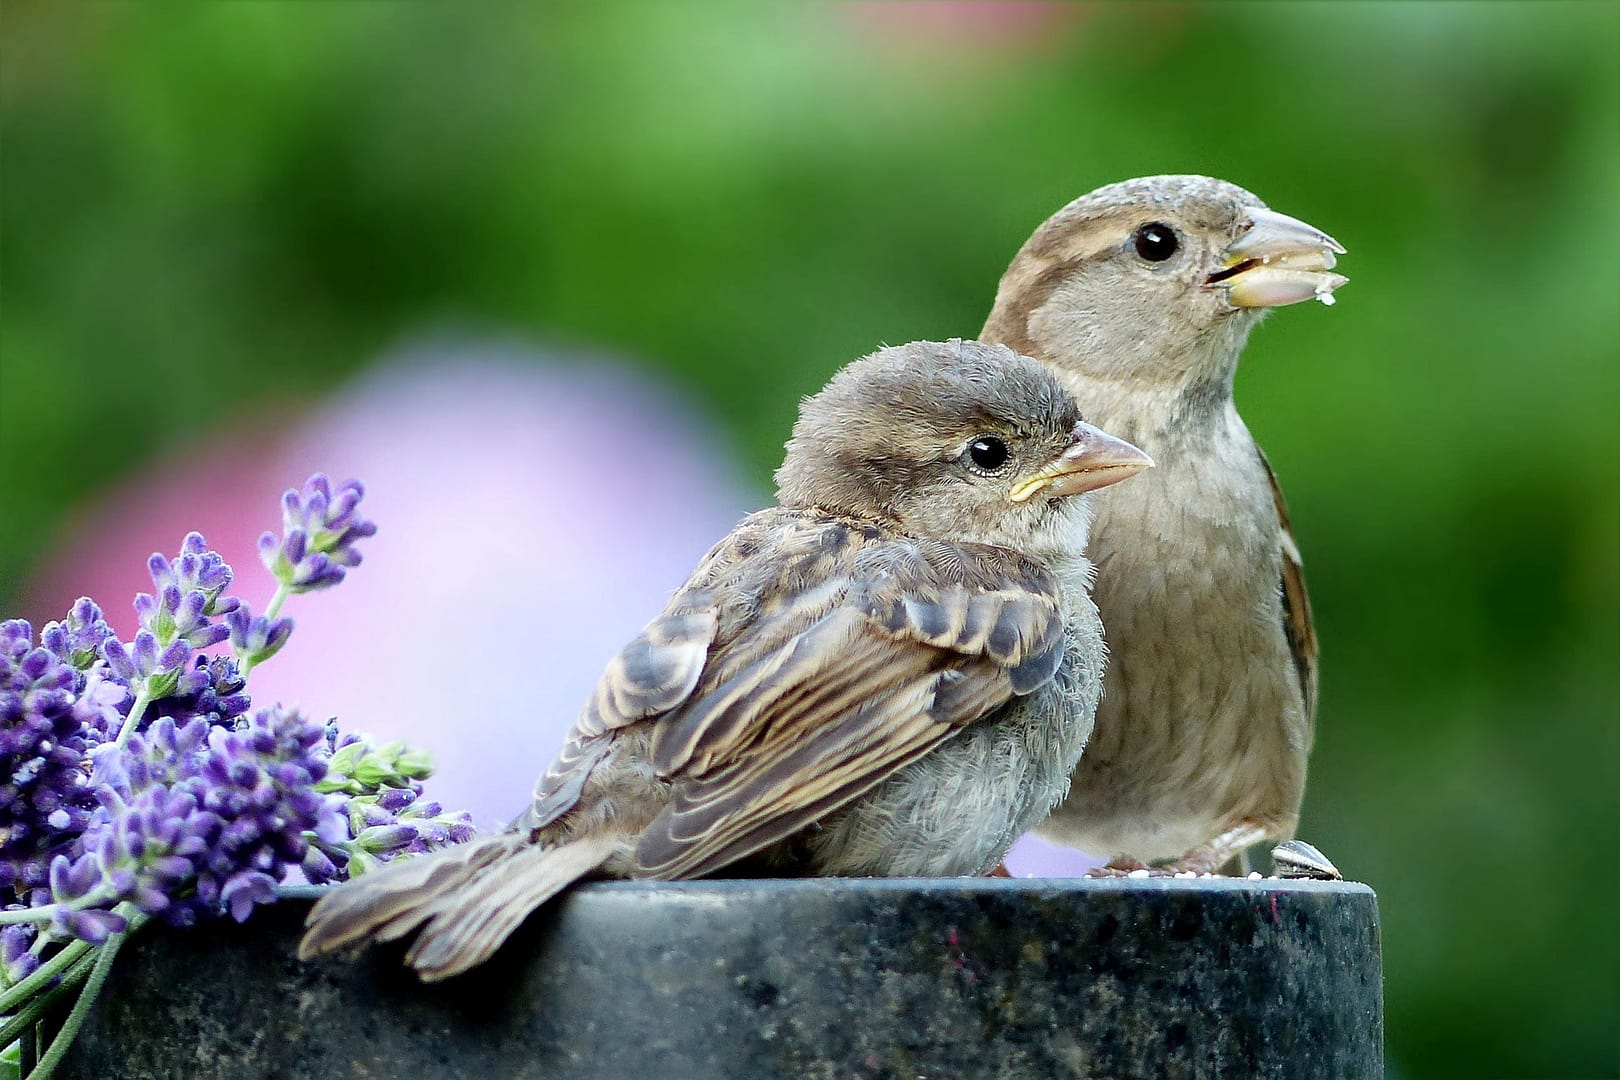 Mom and baby bird